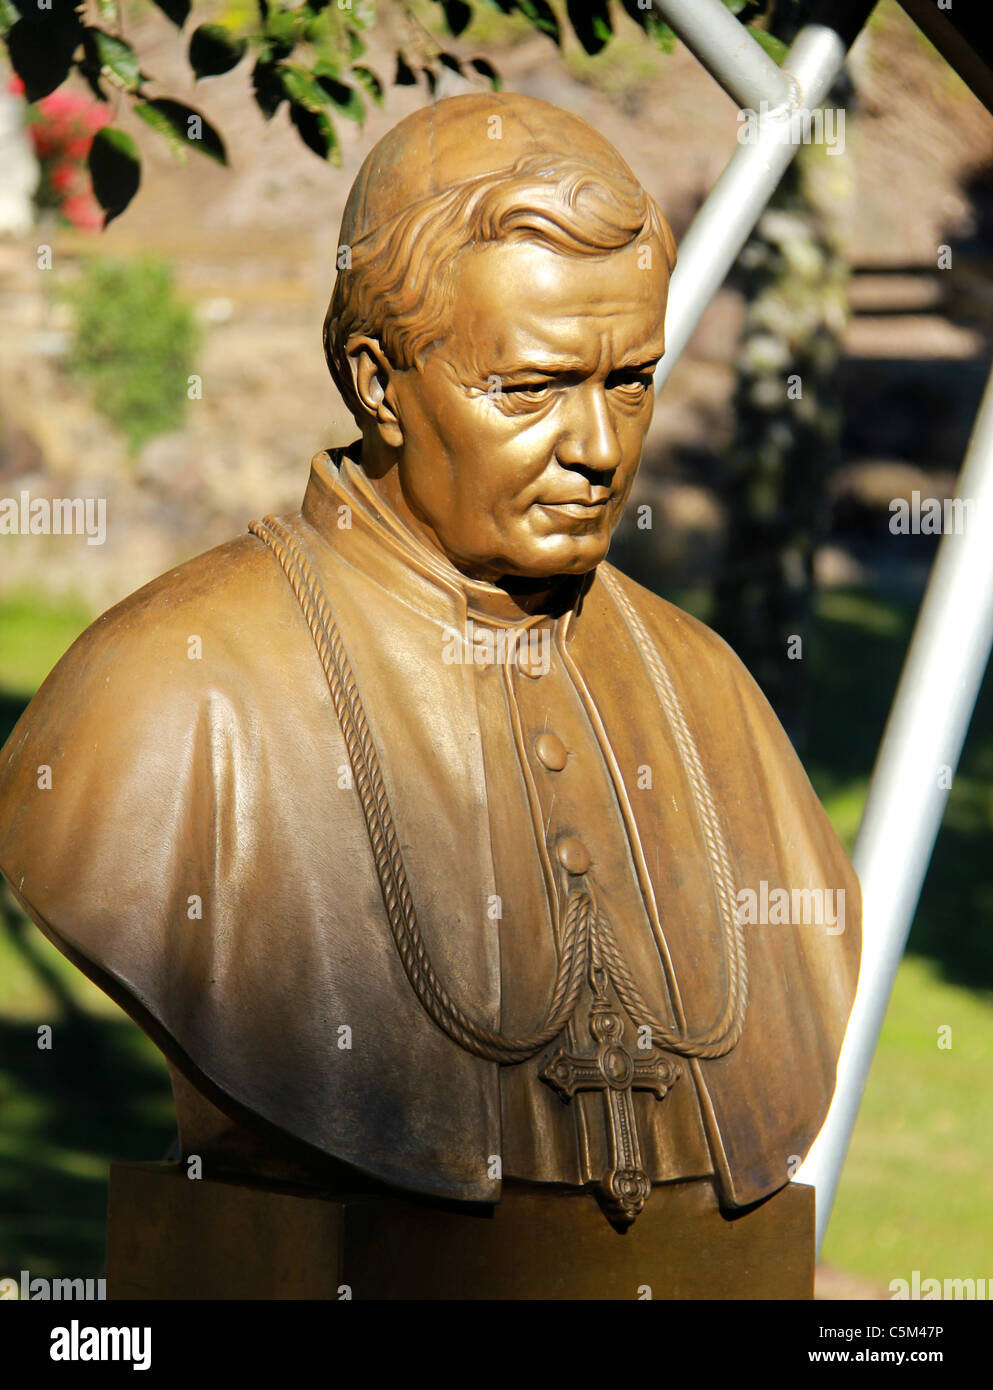 Bishop statue in Brisbane Queensland, Australia Stock Photo